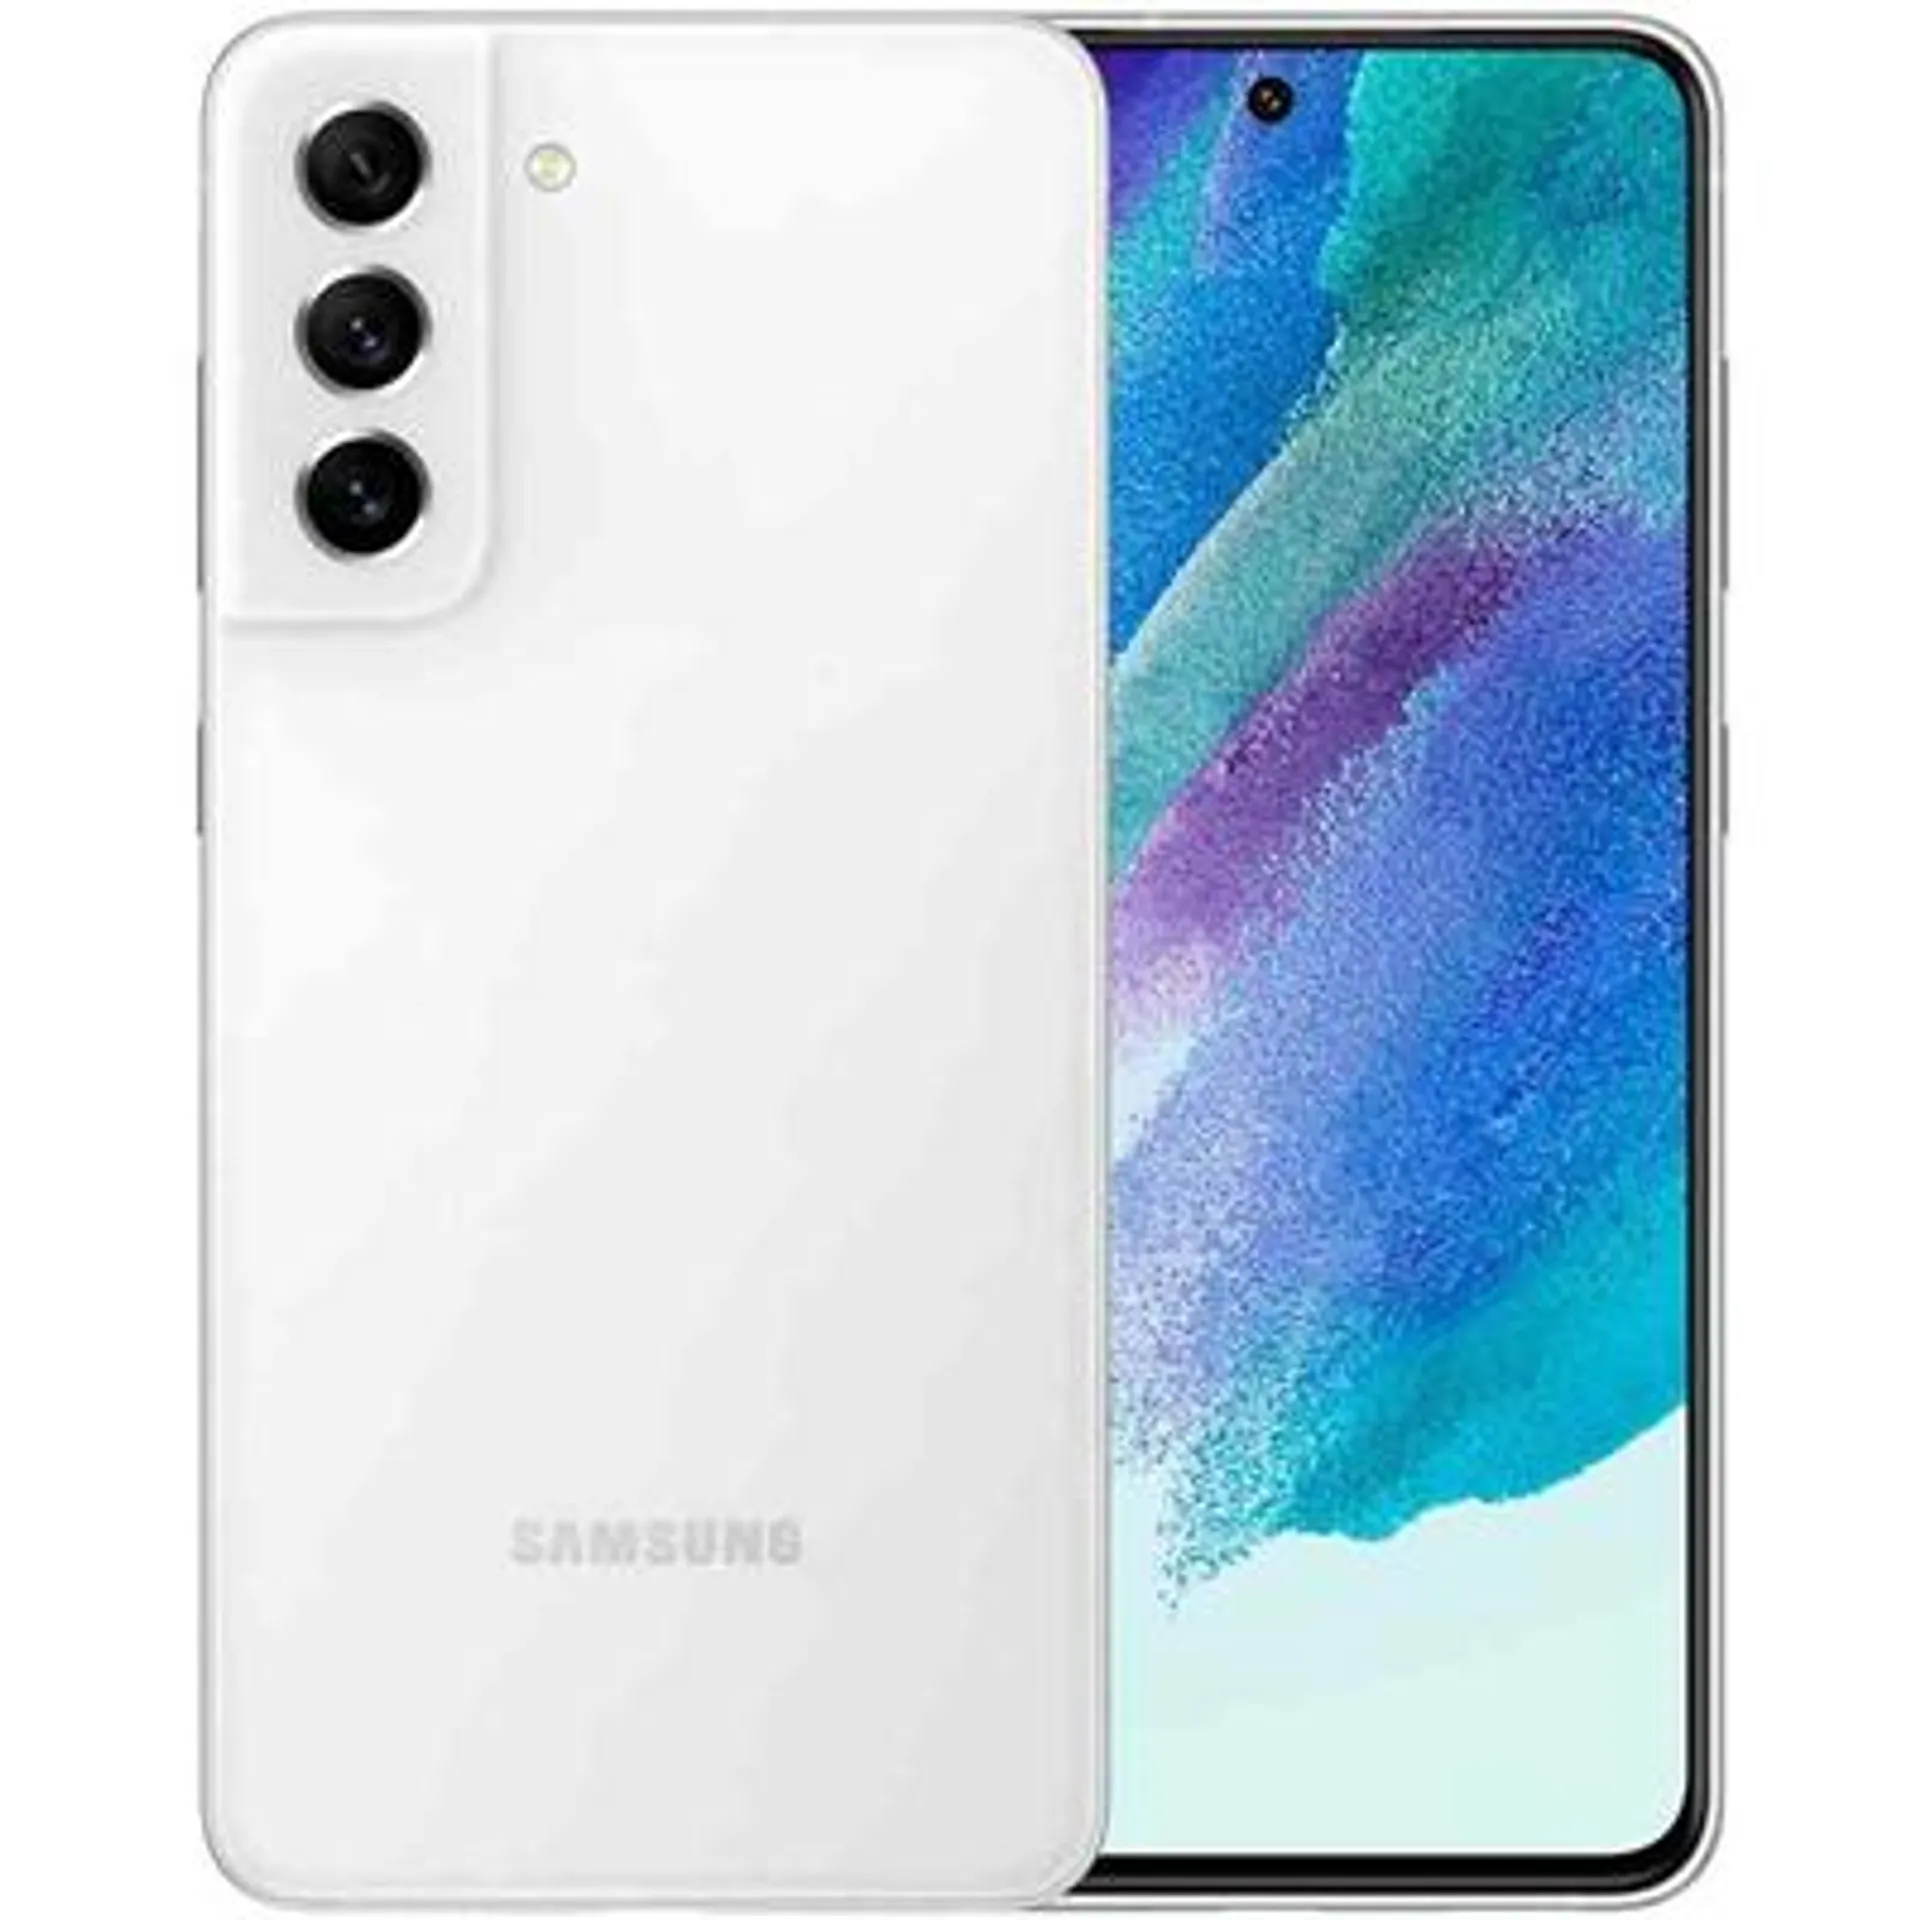 Smartphone Samsung Galaxy S21 FE 5G 256GB Branco Tela 6.4 Câmera Traseira 12MP 6GB RAM